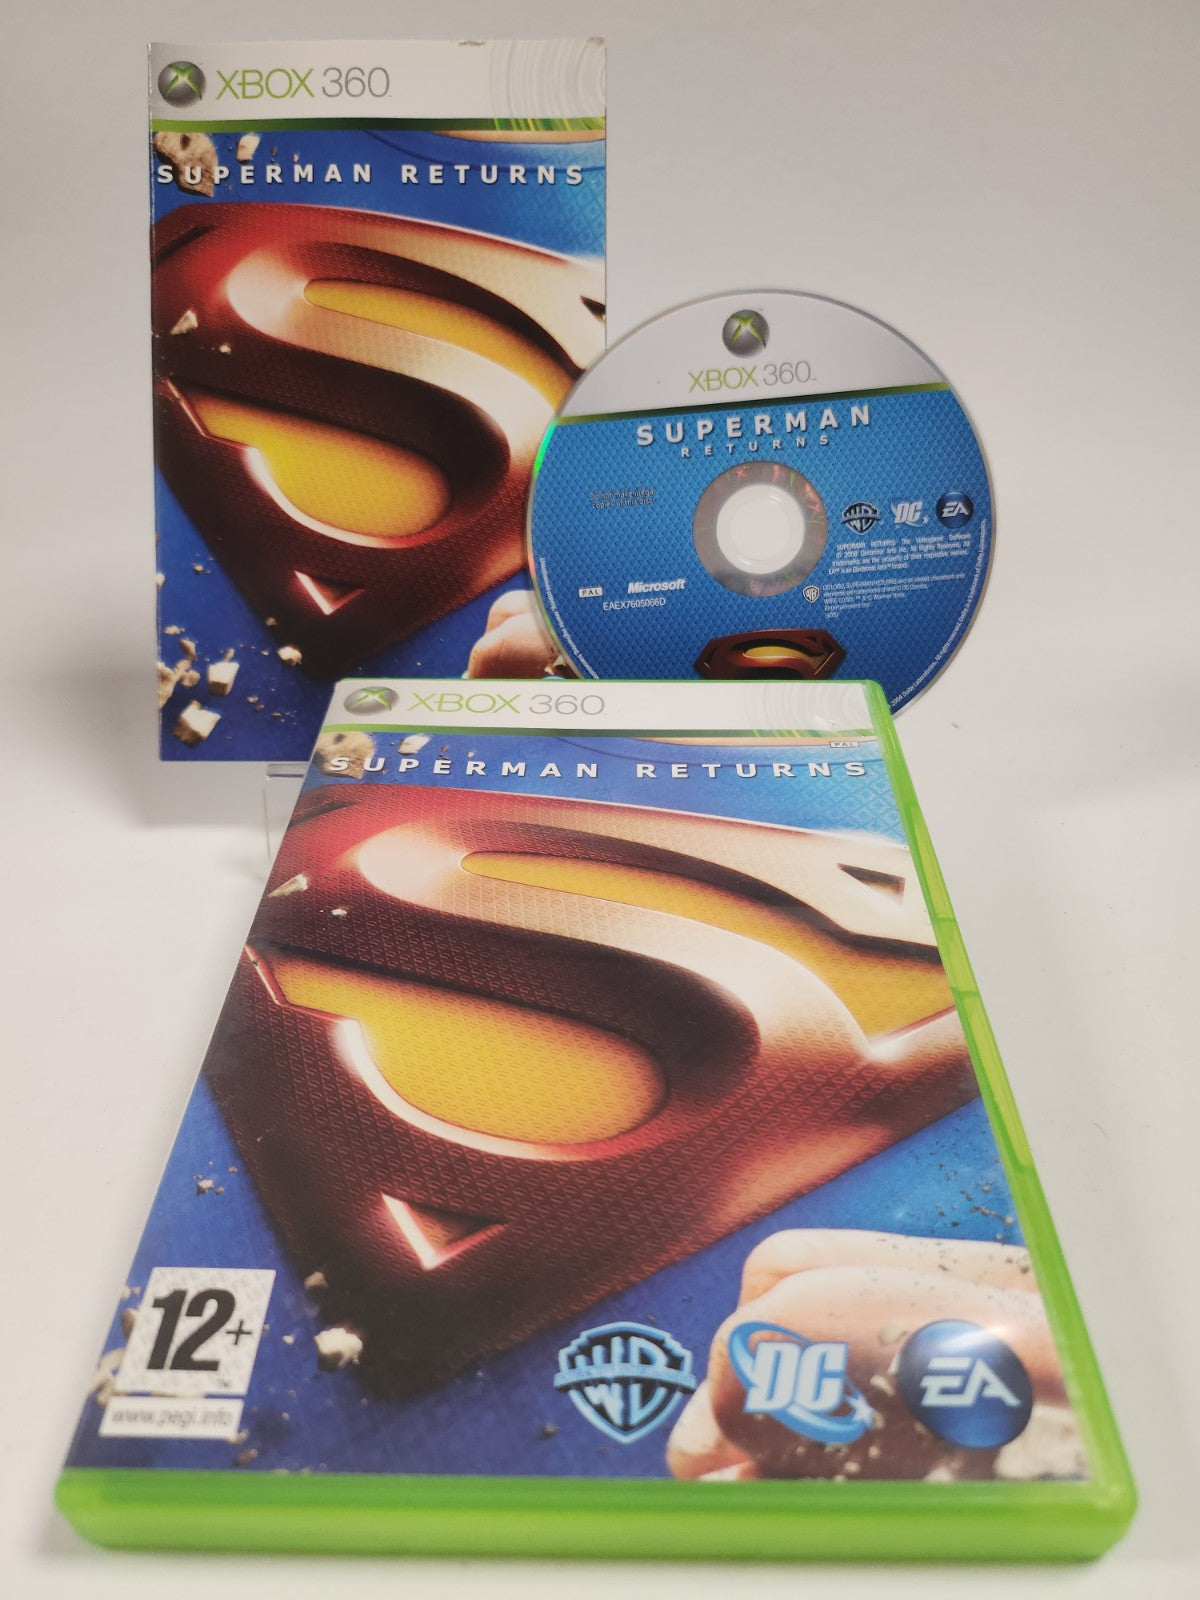 Superman bringt Xbox 360 zurück